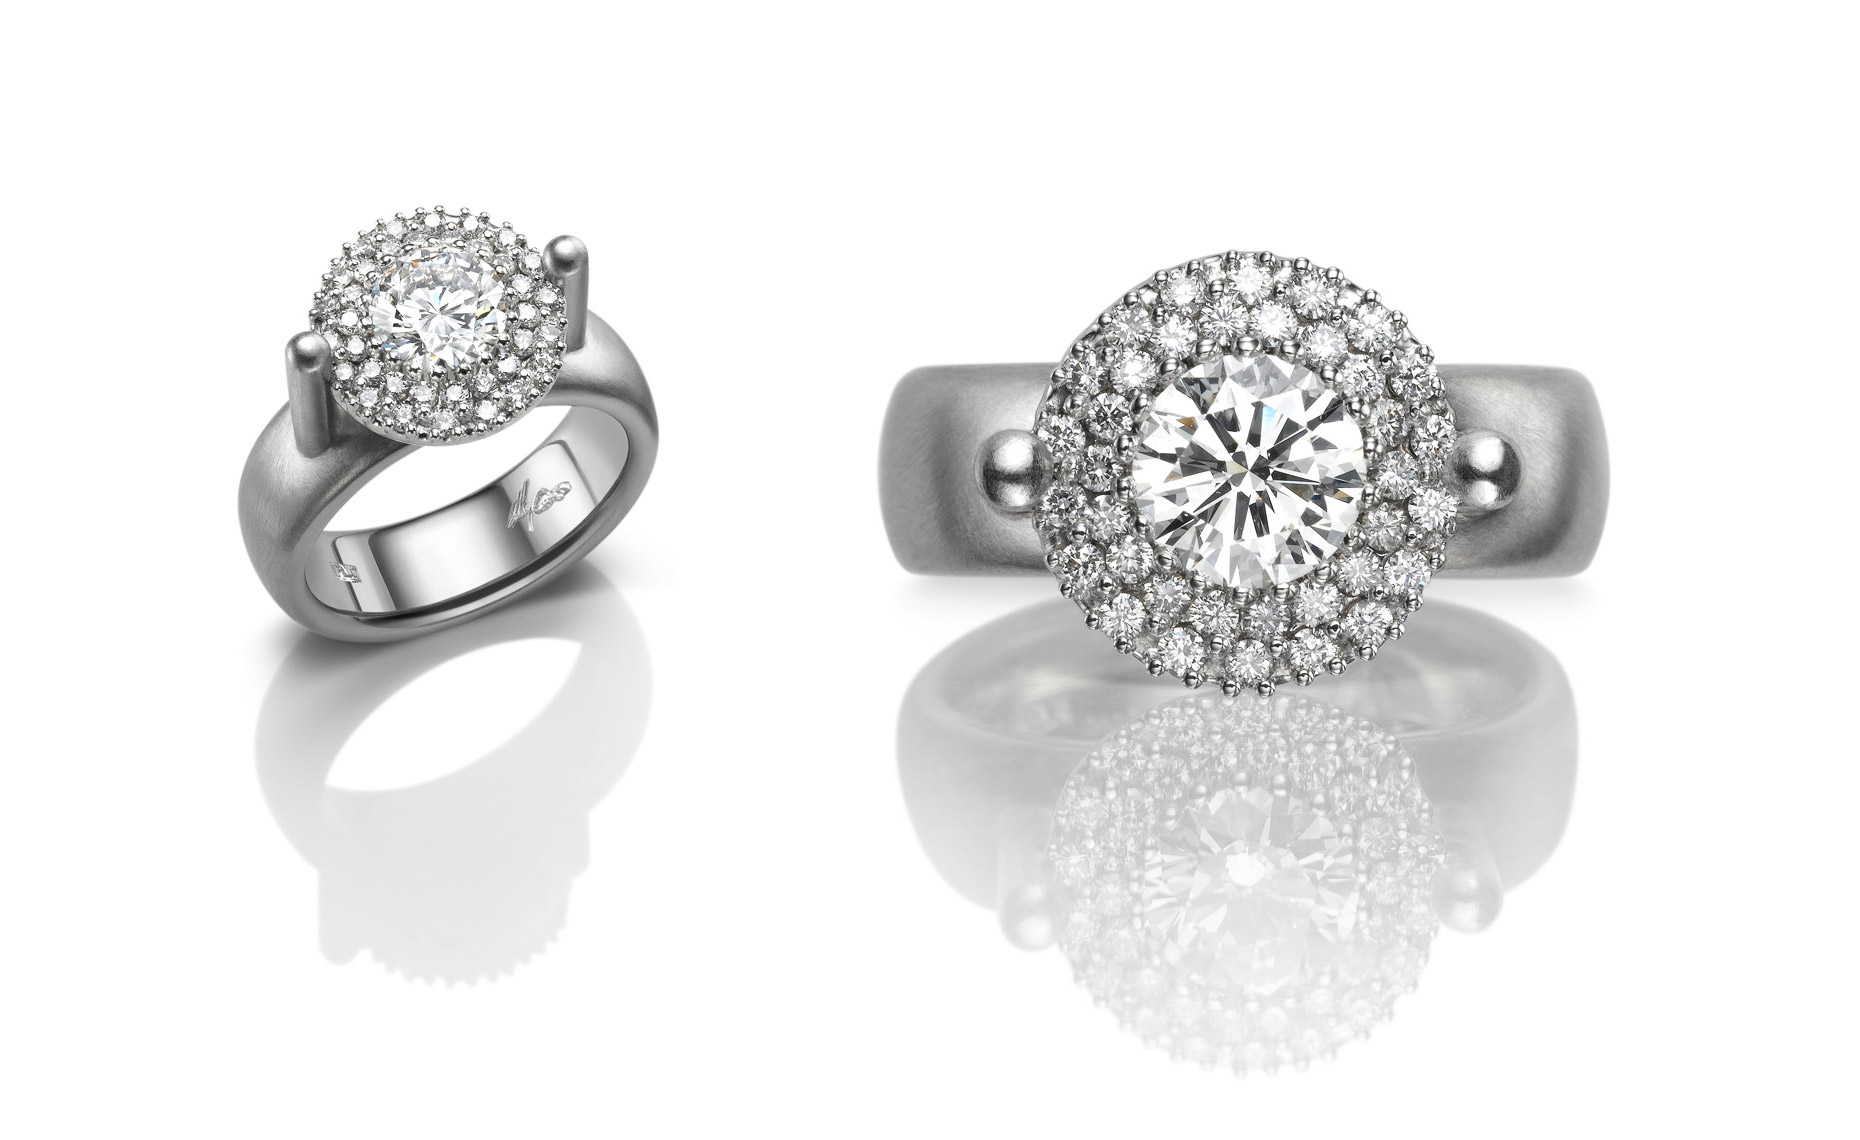 NYC jewelry product photography on white - Whitney Boin Diamonds Ring  by Jewelry Photographer Kliton Ceku